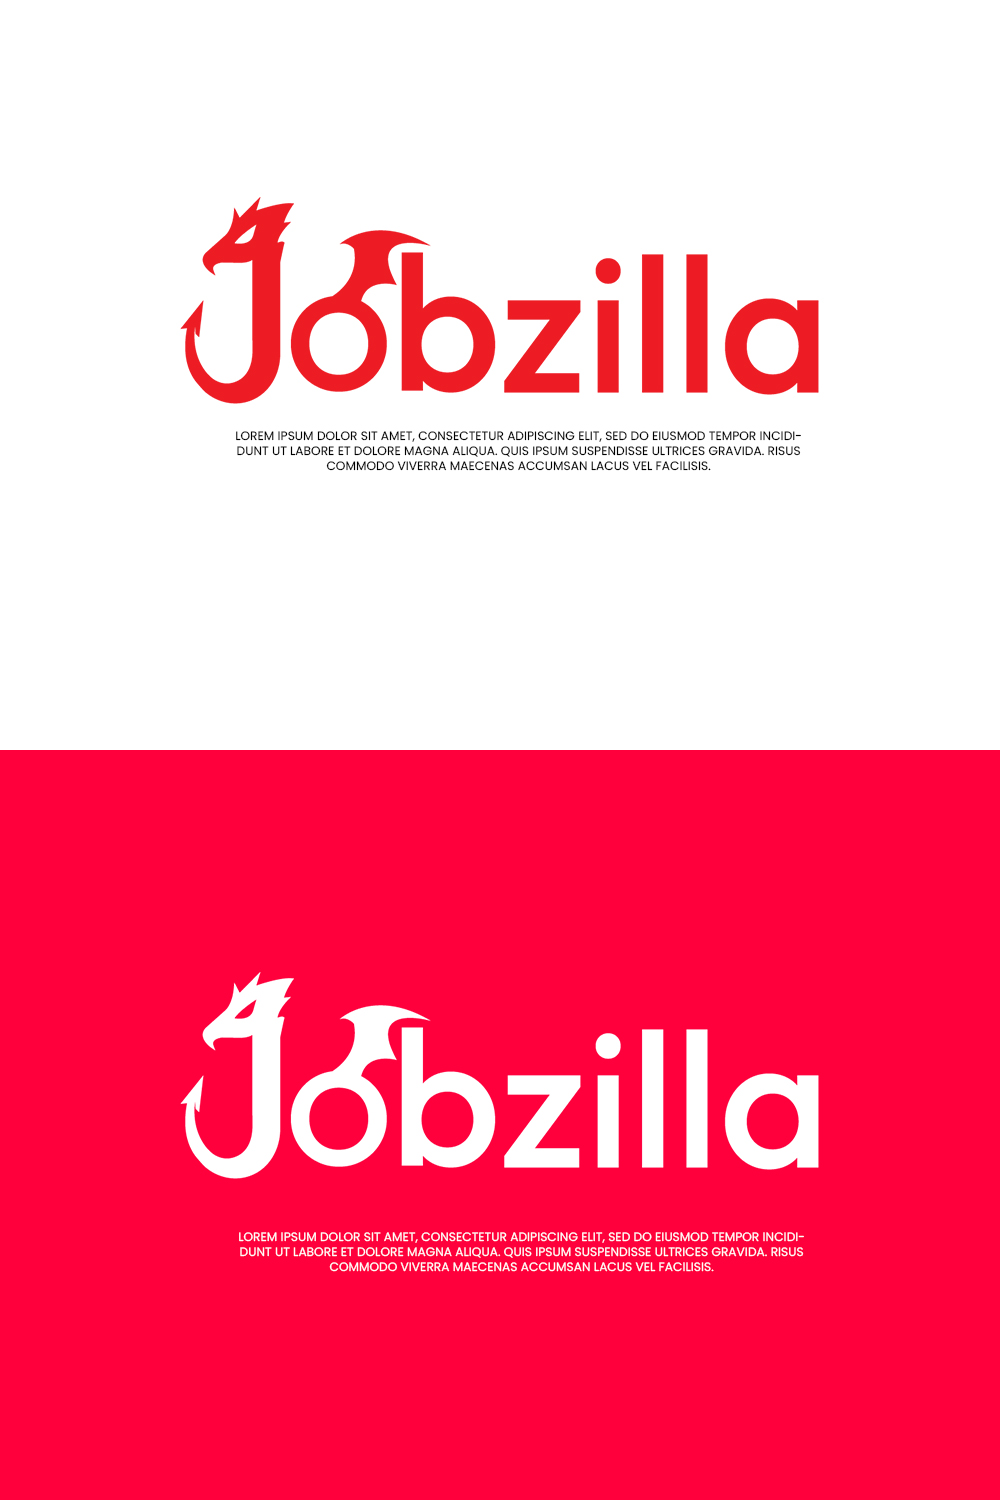 Lettermark Logo Jobzilla pinterest preview image.